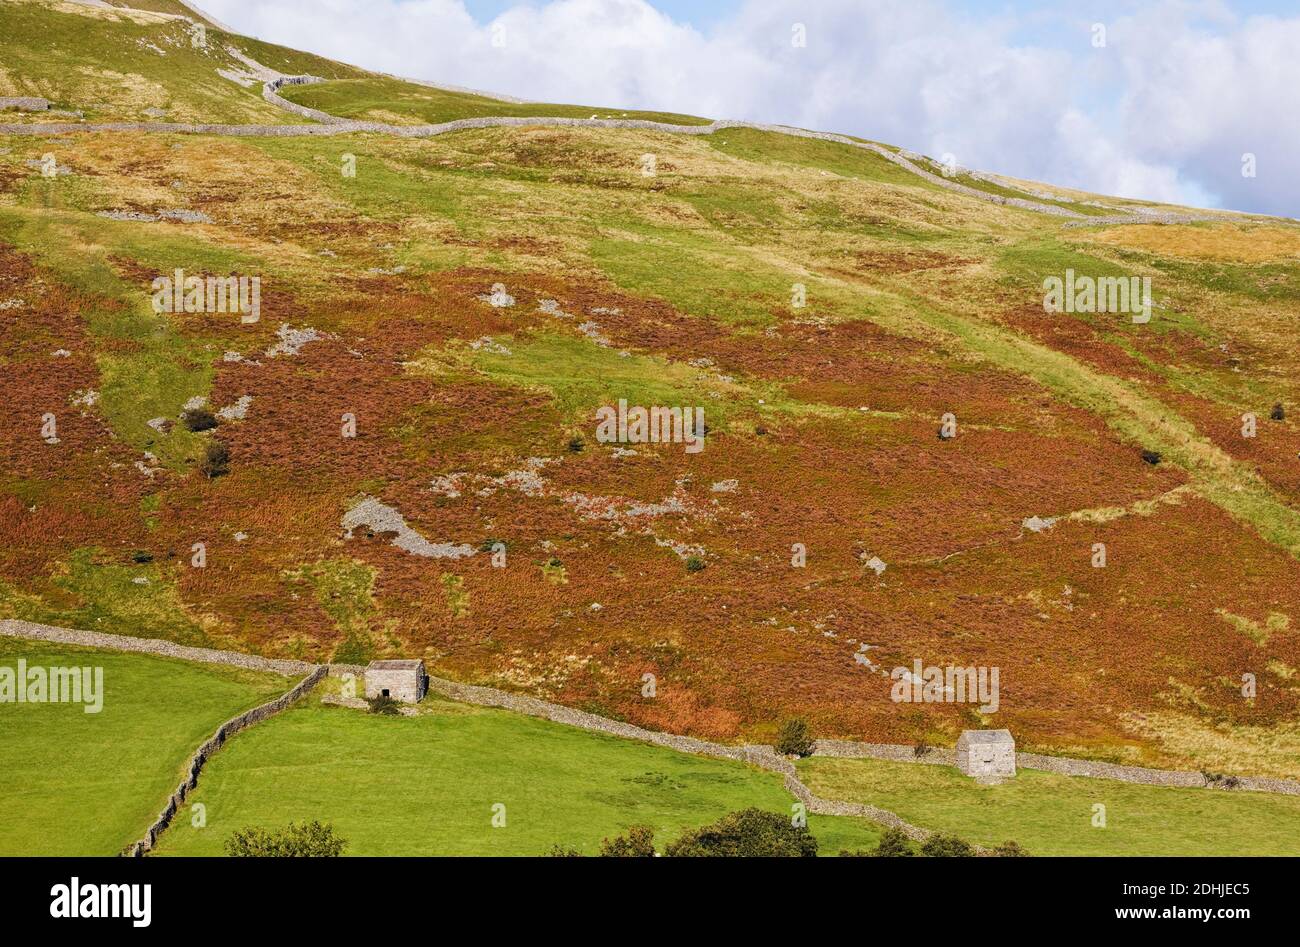 Stone huts in heathery rural landscape. Stock Photo